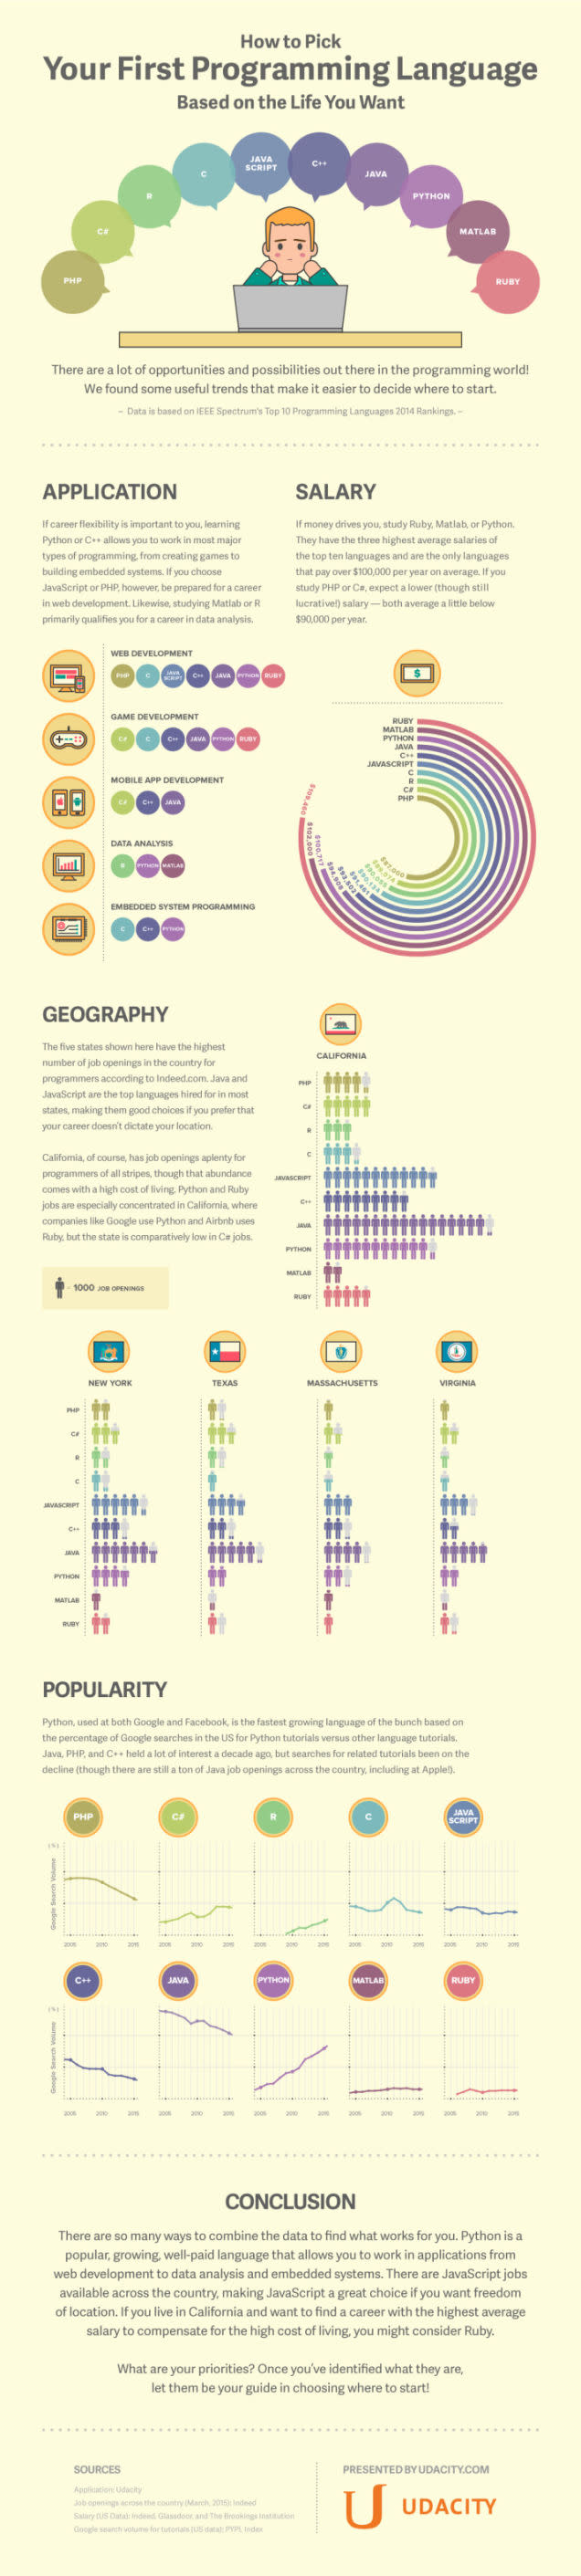 programming-language-infographic-1